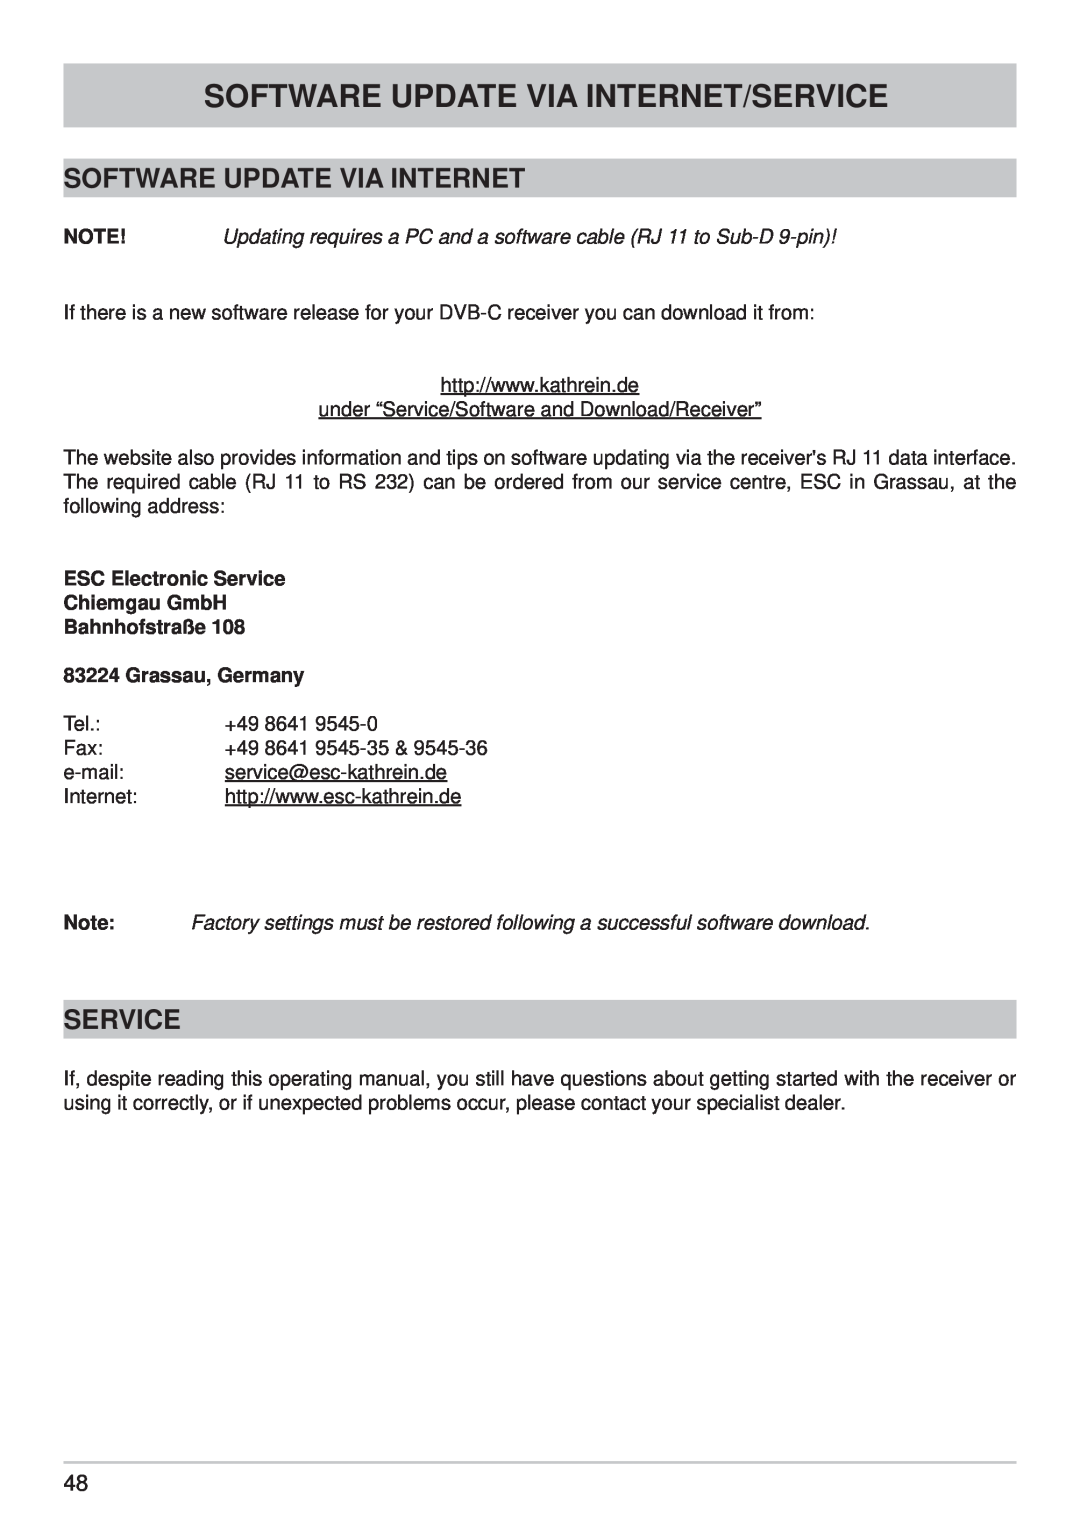 Kathrein UFC 762si, UFC 762sw manual Software Update Via Internet/Service 